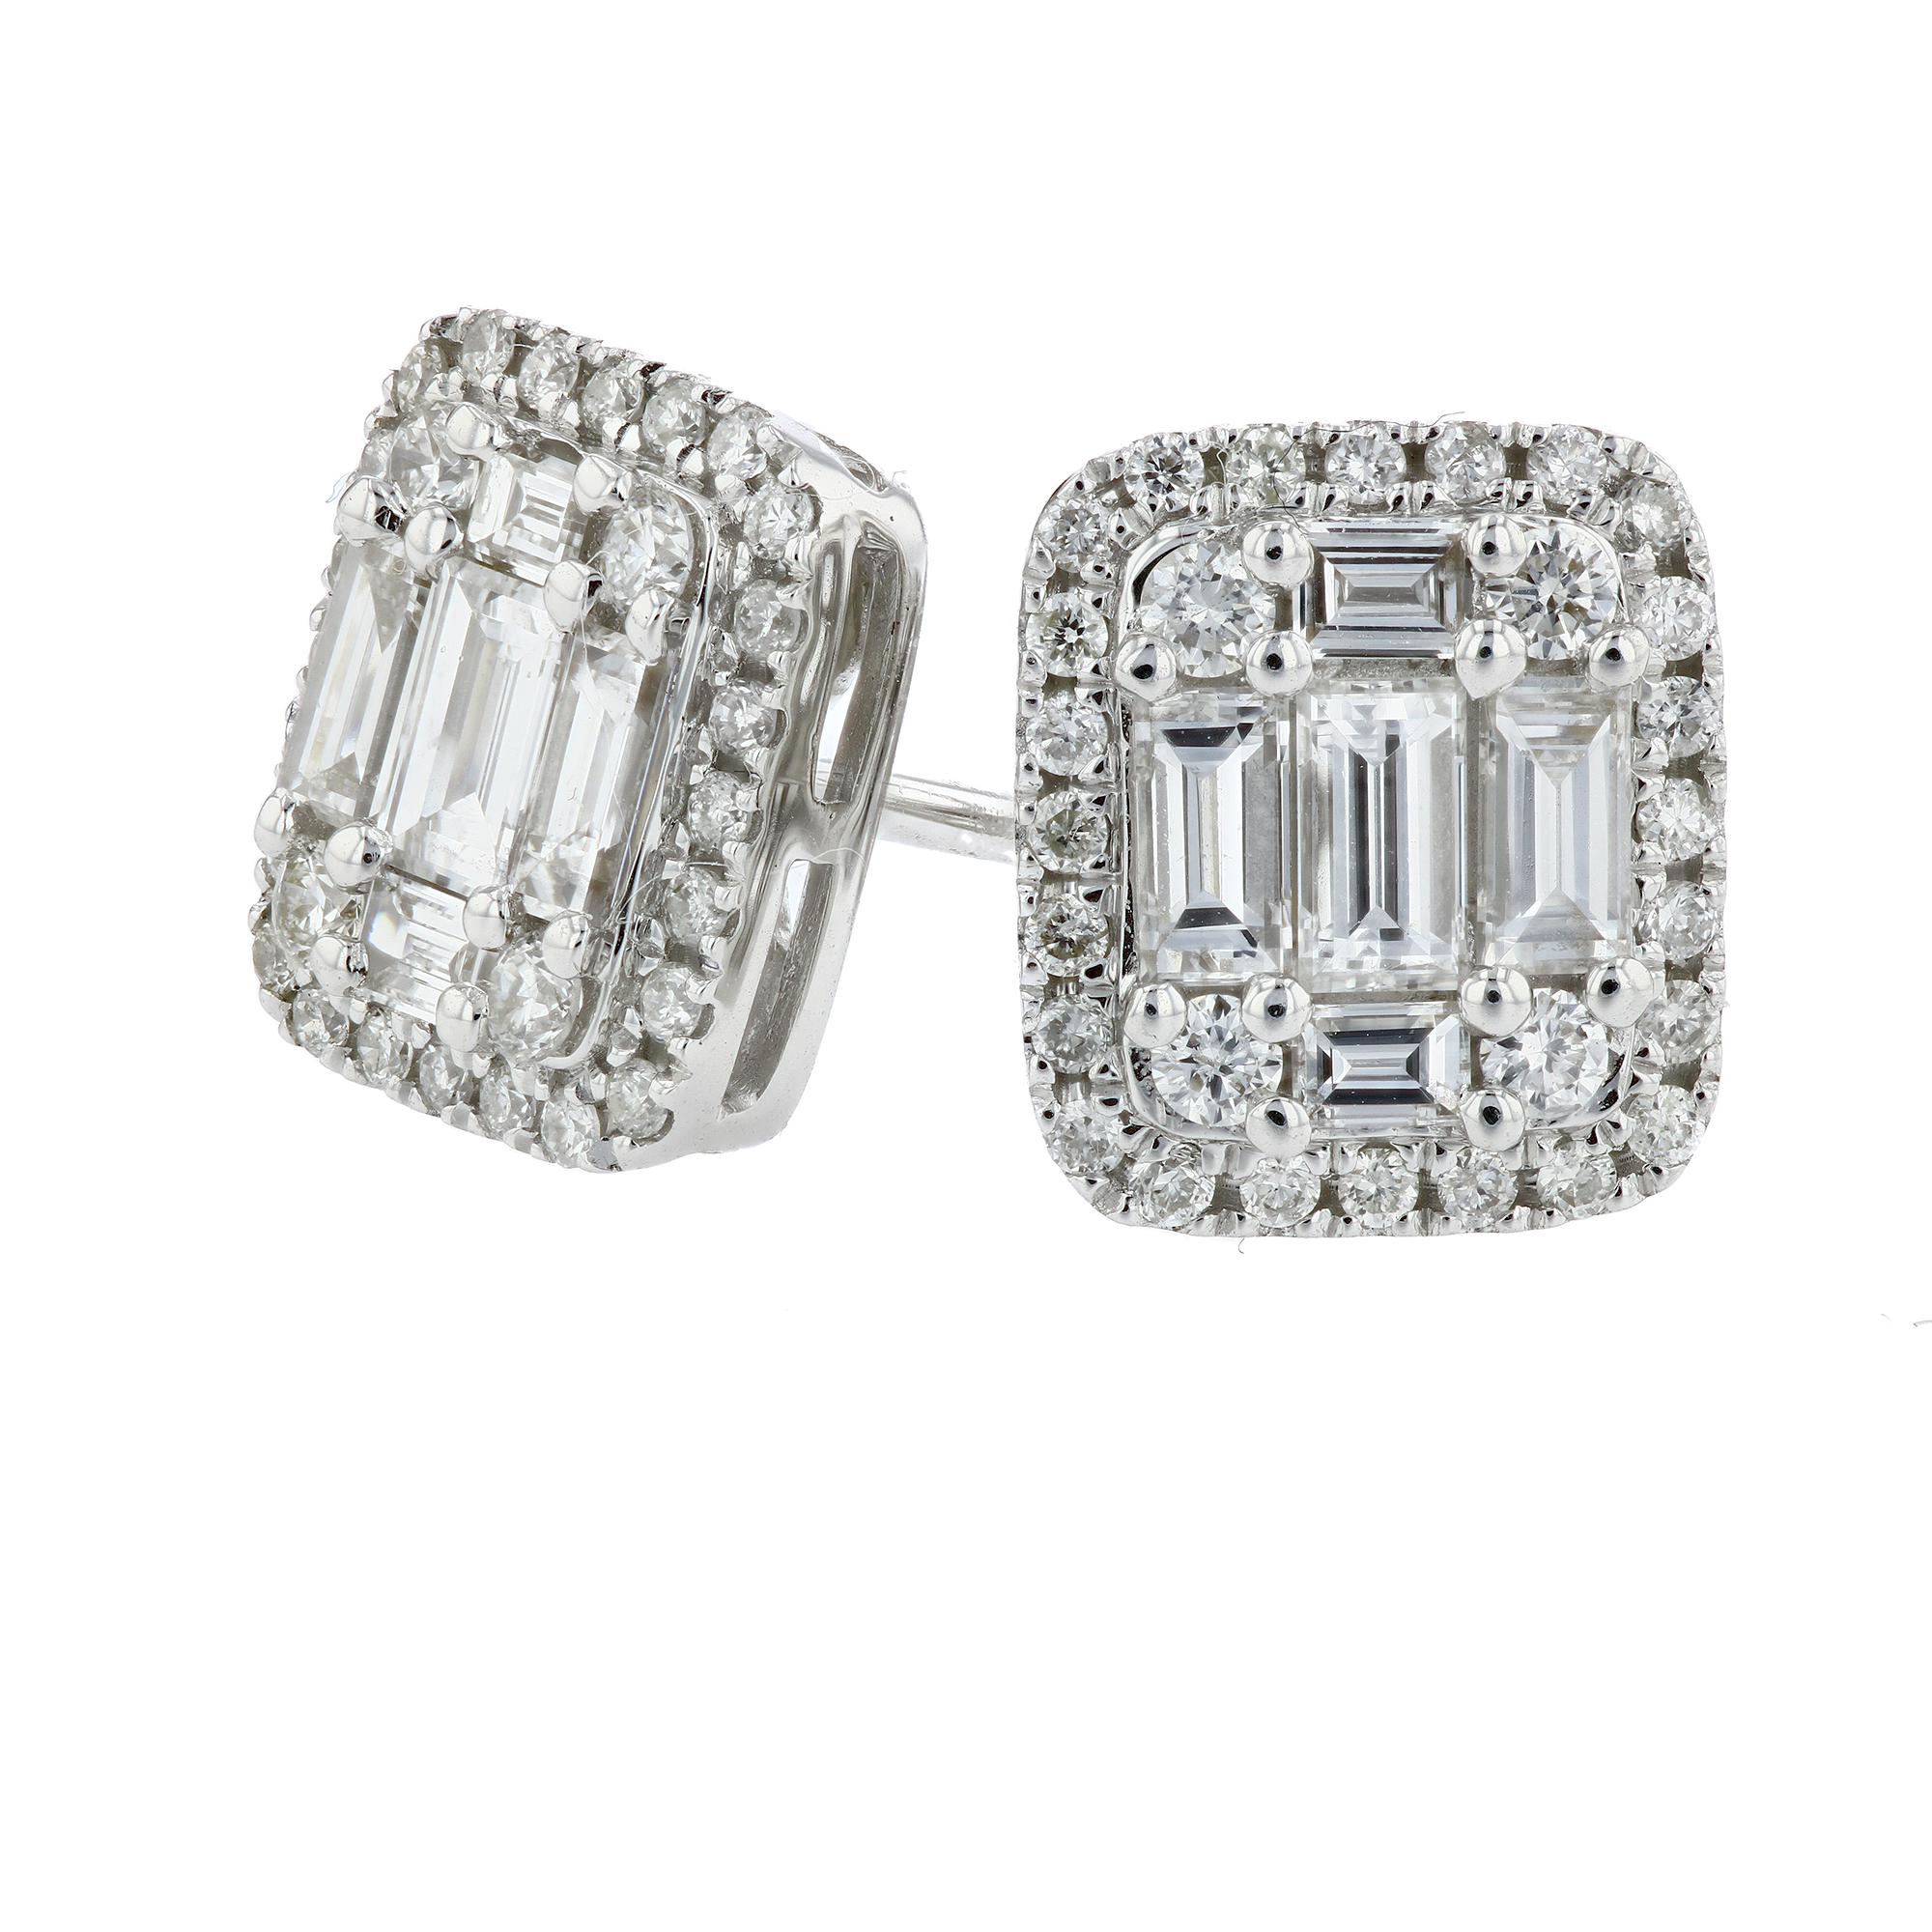 View 0.80ctw Diamond Cluster Earrings in 18k White Gold